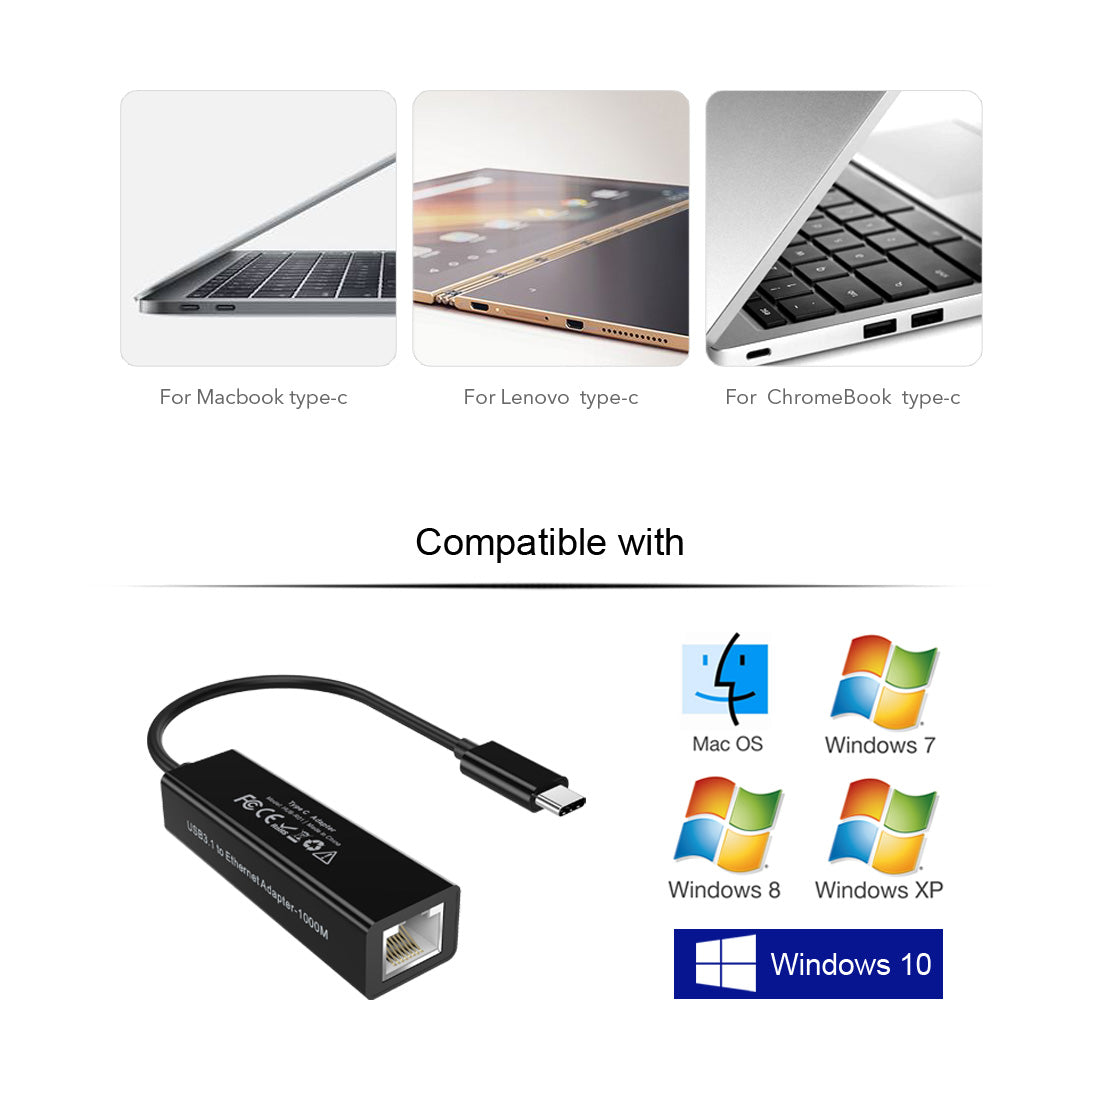 HUB-R01 USB C auf Ethernet Adapter, CHOETECH USB 3.1 Typ C auf RJ-45 10/100/1000 Gigabit Ethernet LAN Netzwerkadapter für 2017 iMac, 2017/2016 MacBook Pro, 2015 MacBook, ChromeBook Pixel etc